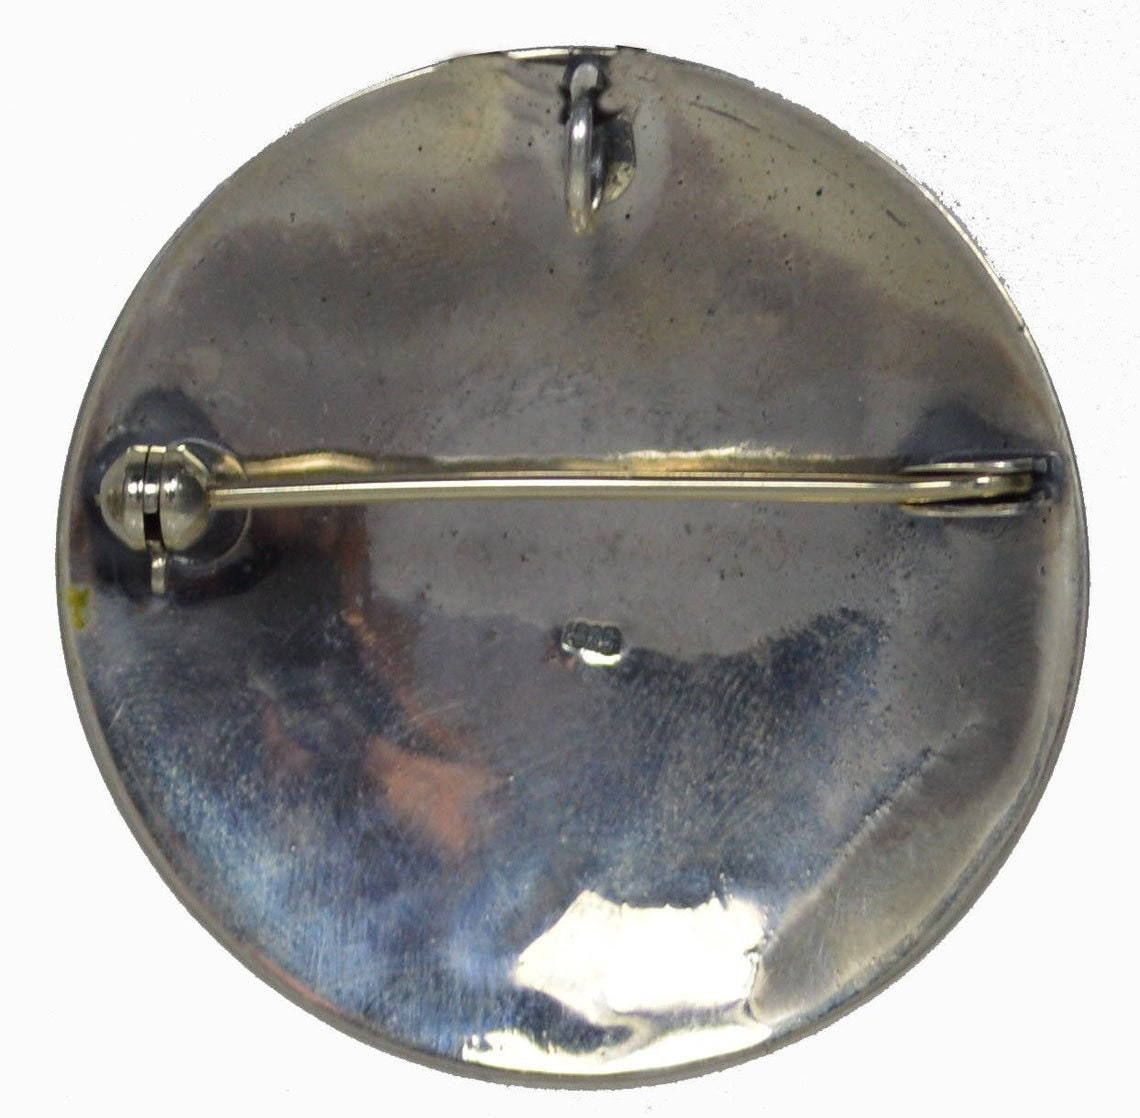 Byzantine Ornament - Floral Motif - Pendant - Brooch Pin - 925 Sterling Silver